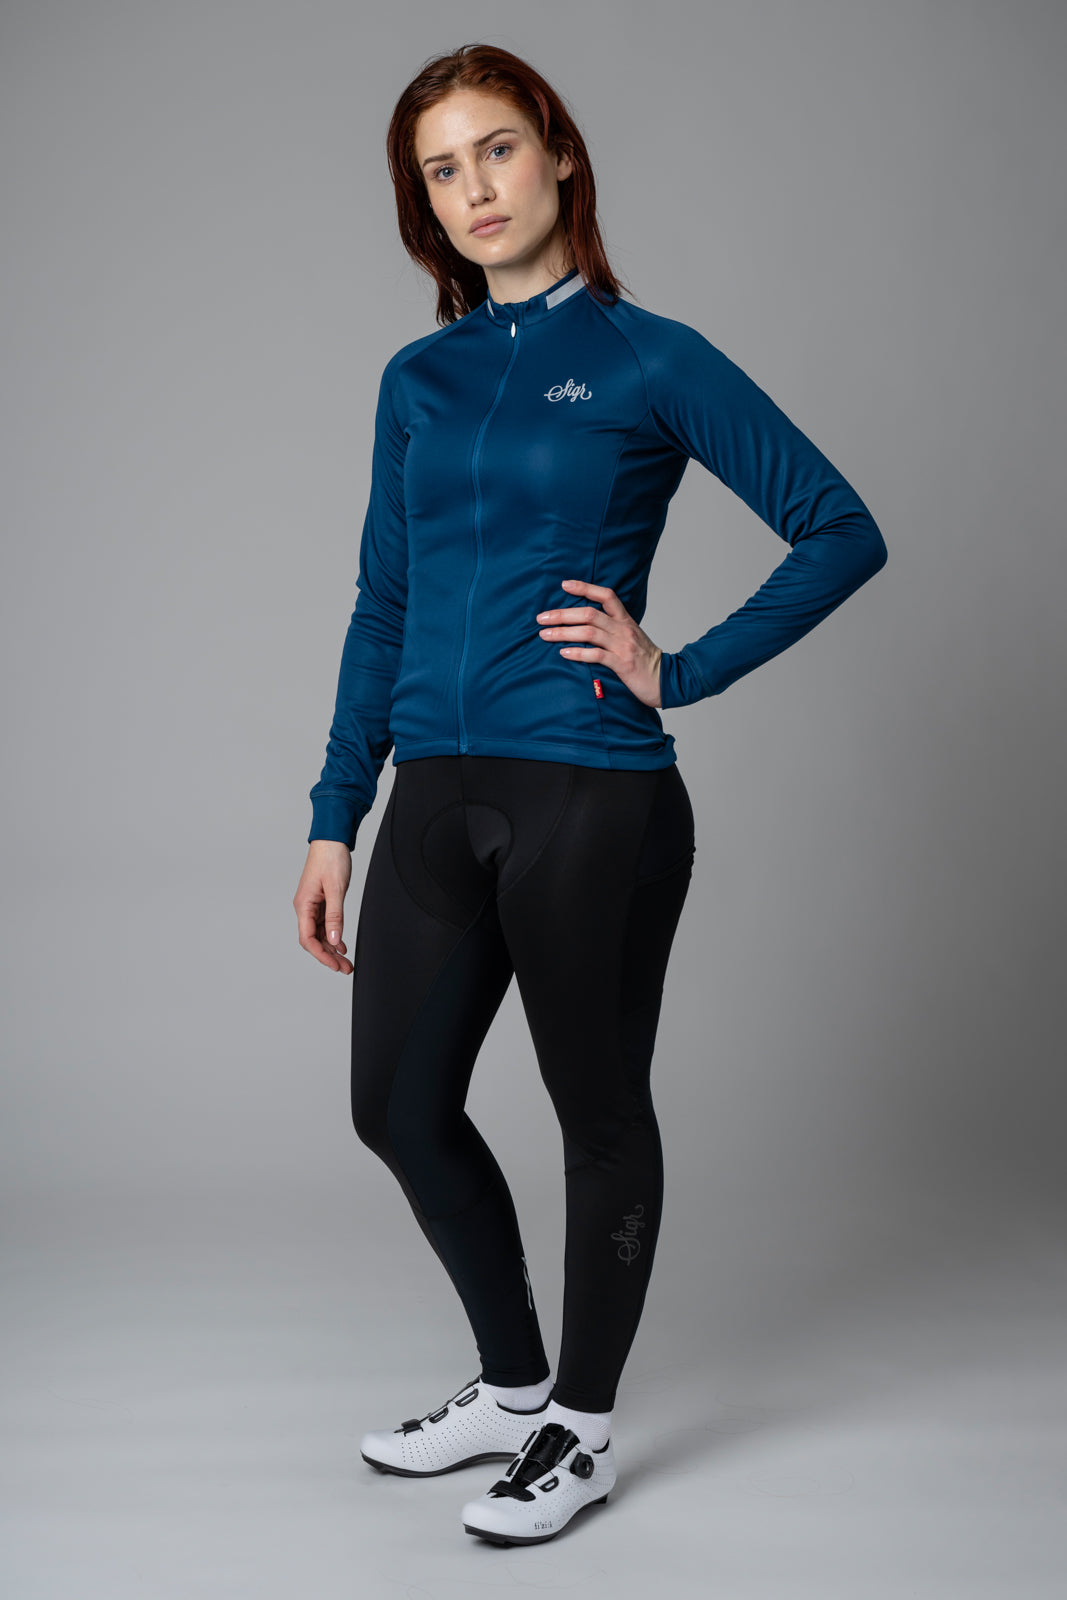 Sigr Krokus Blue - Warmer Long Sleeved Jersey for Women